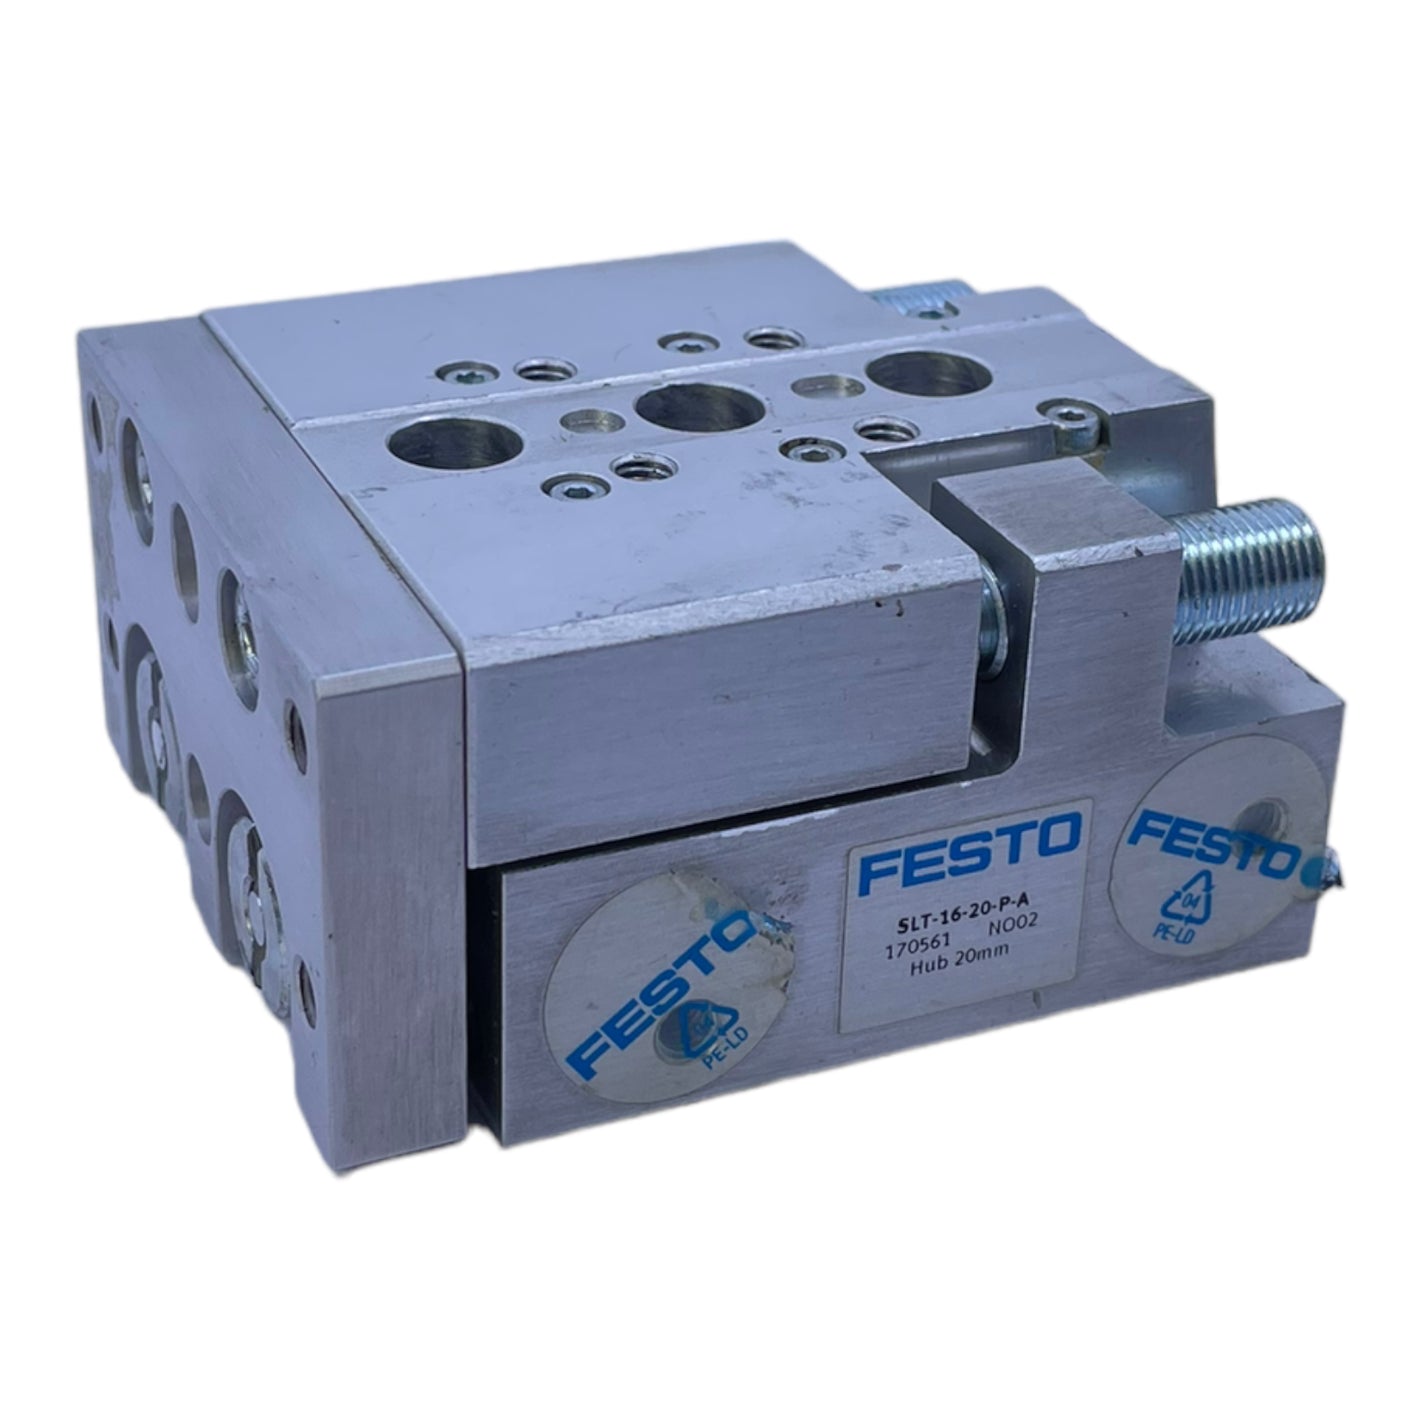 Festo SLT-16-20-PA mini slide 170561 double-acting 1...10 bar 